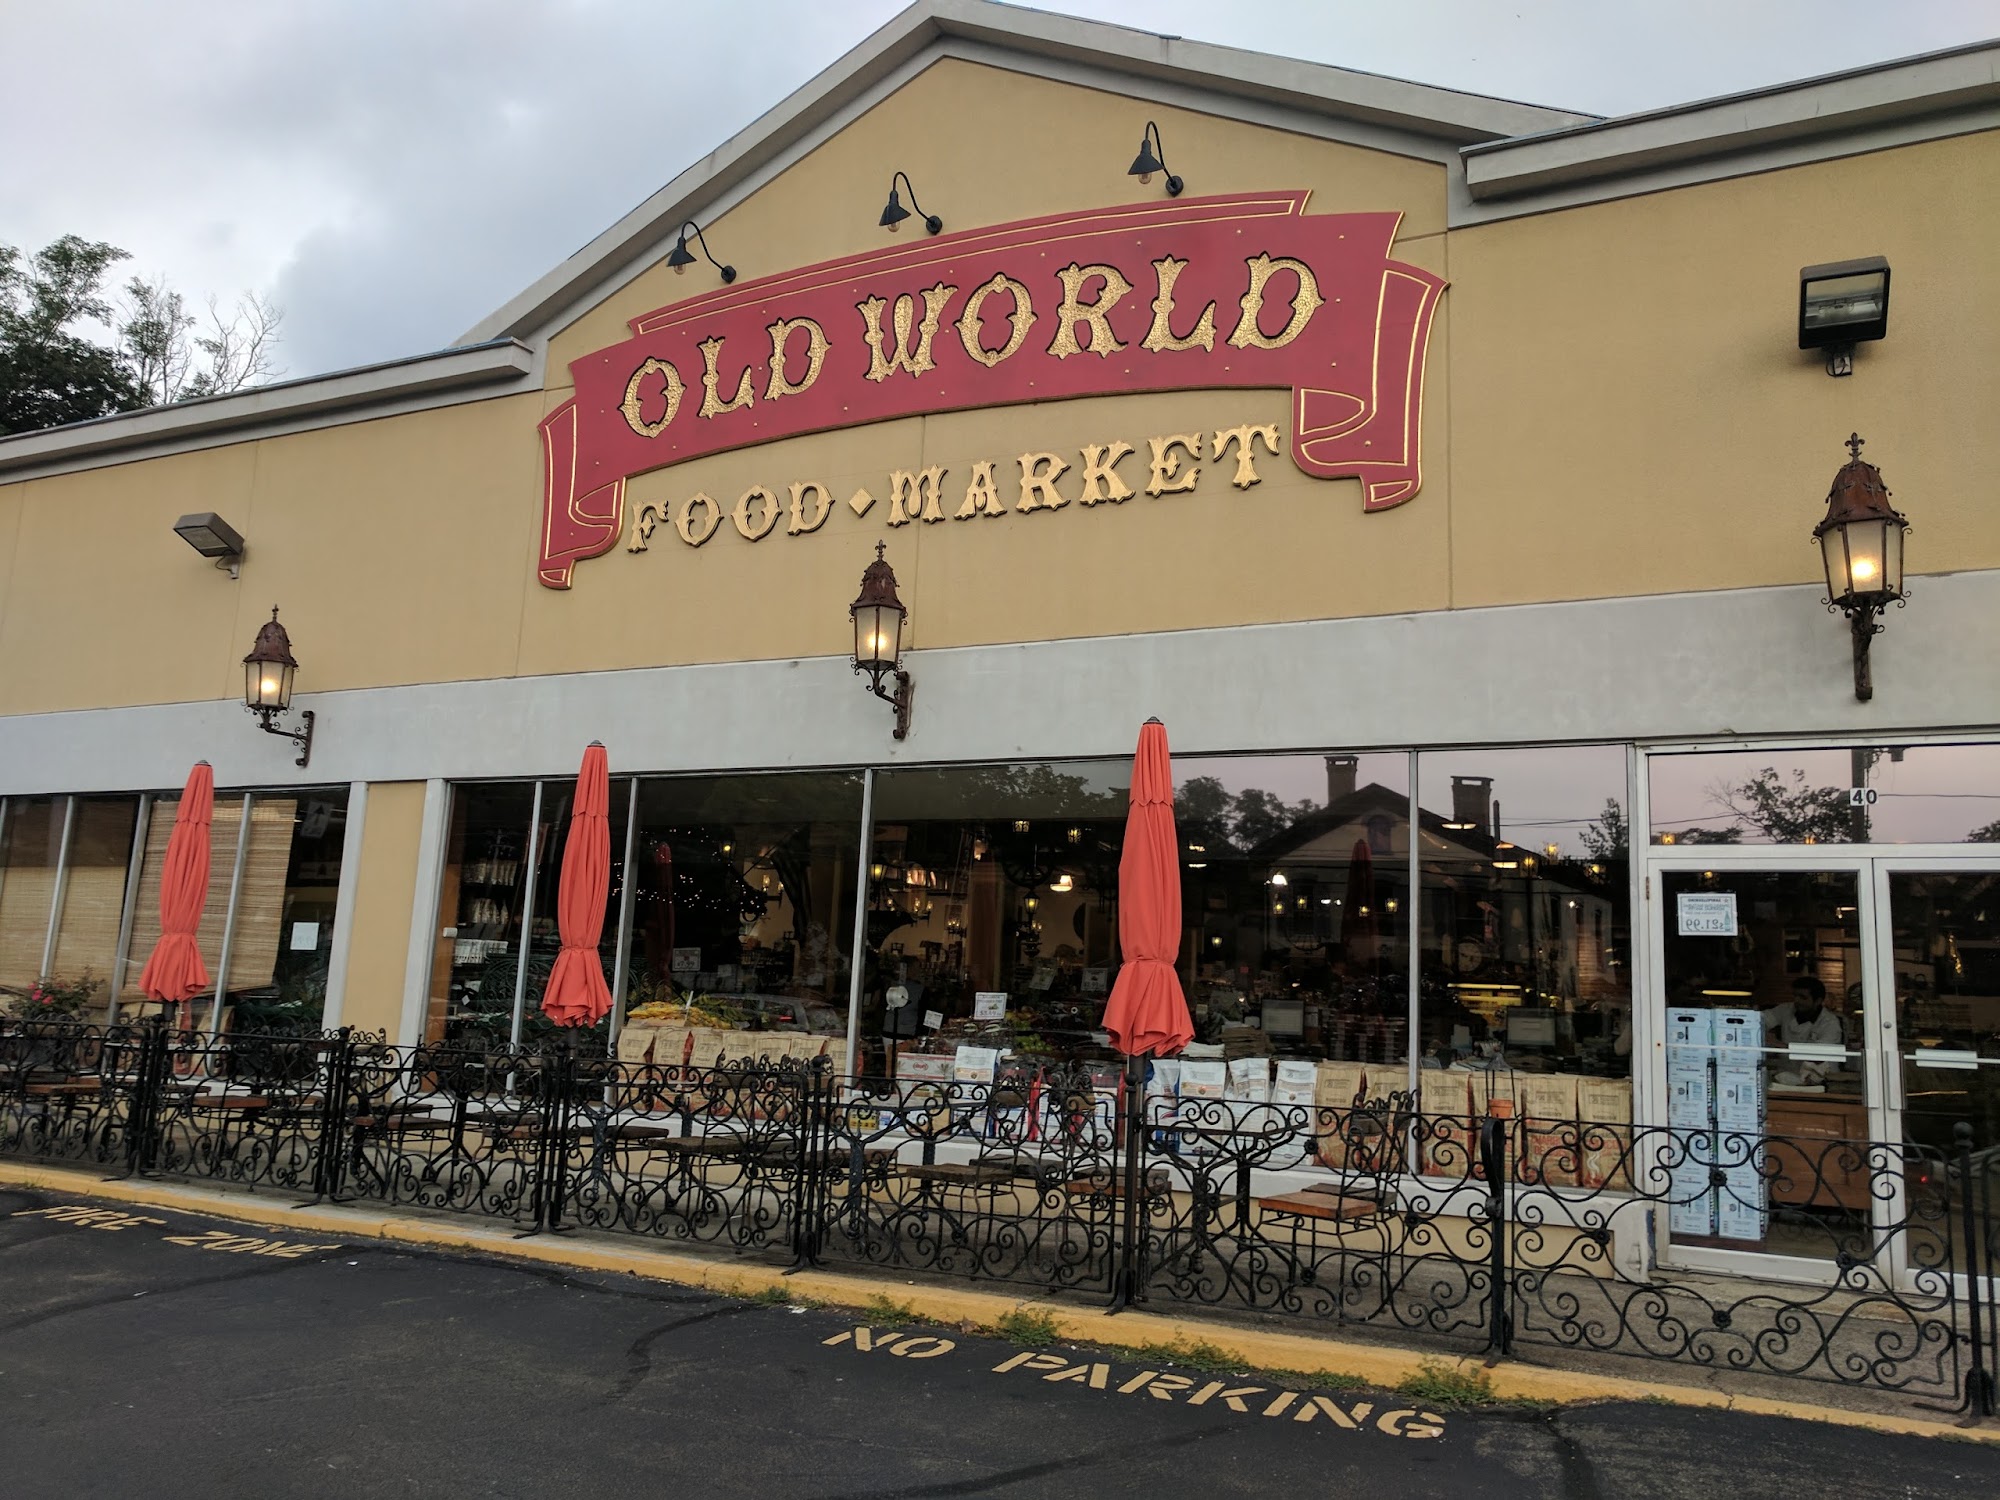 Old World Food Market